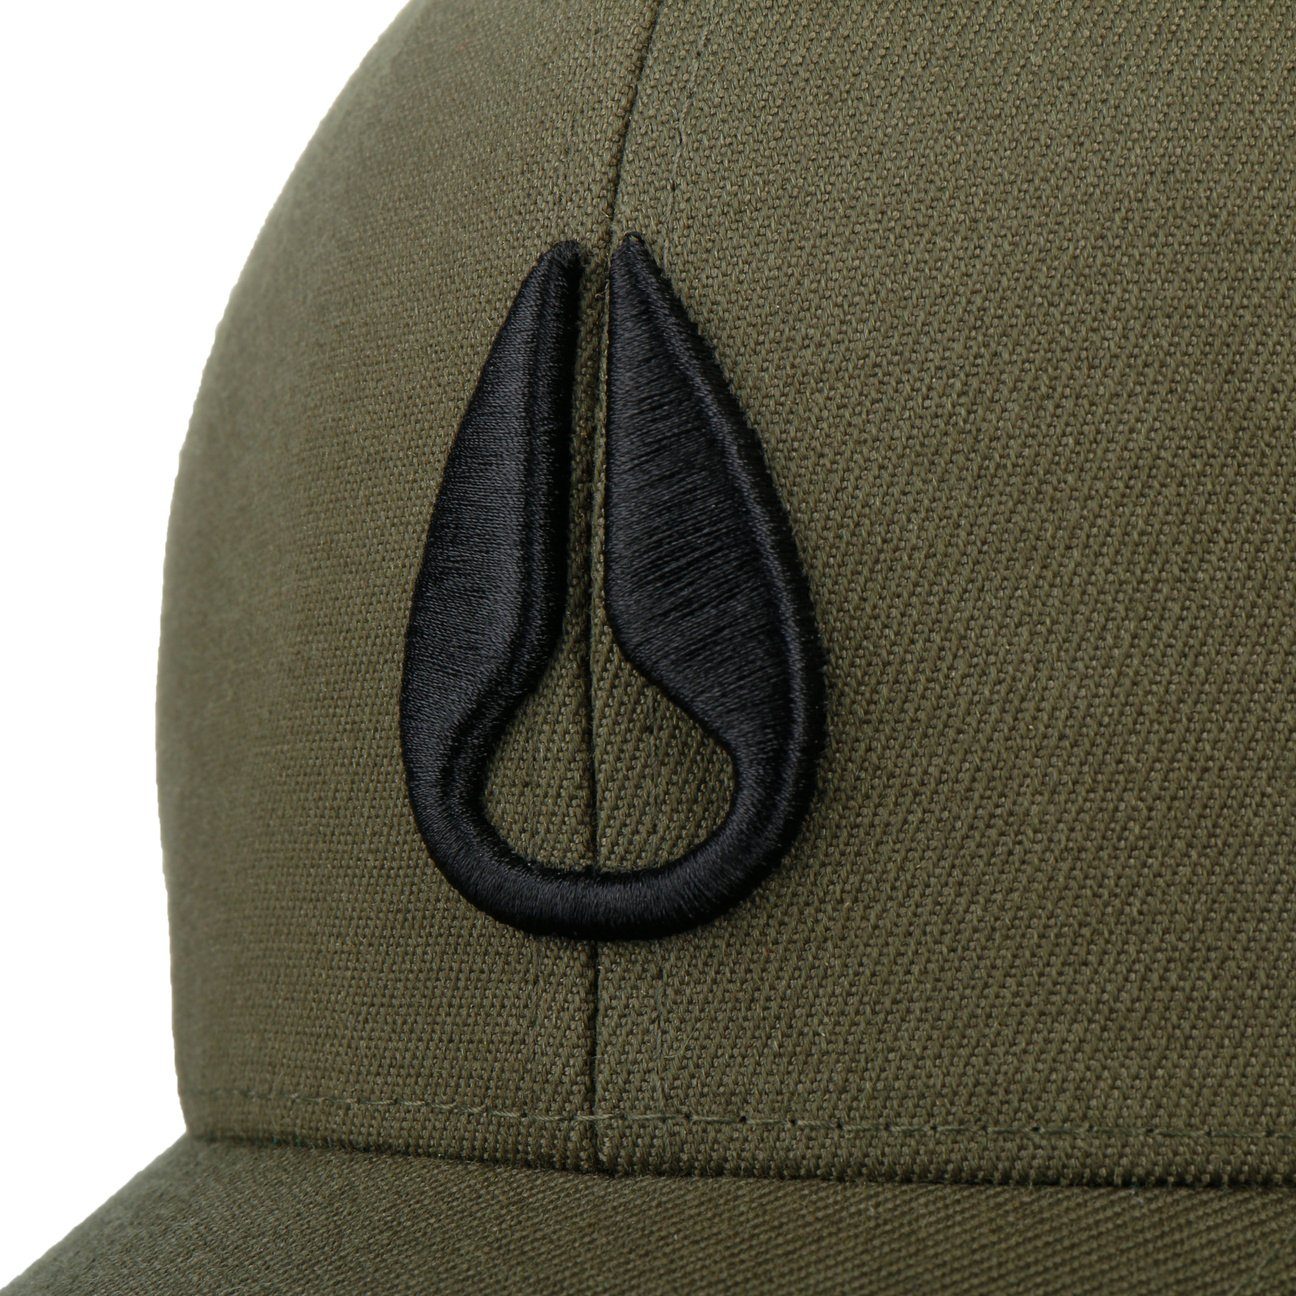 Nixon Baseball Cap (1-St) oliv Basecap Snapback